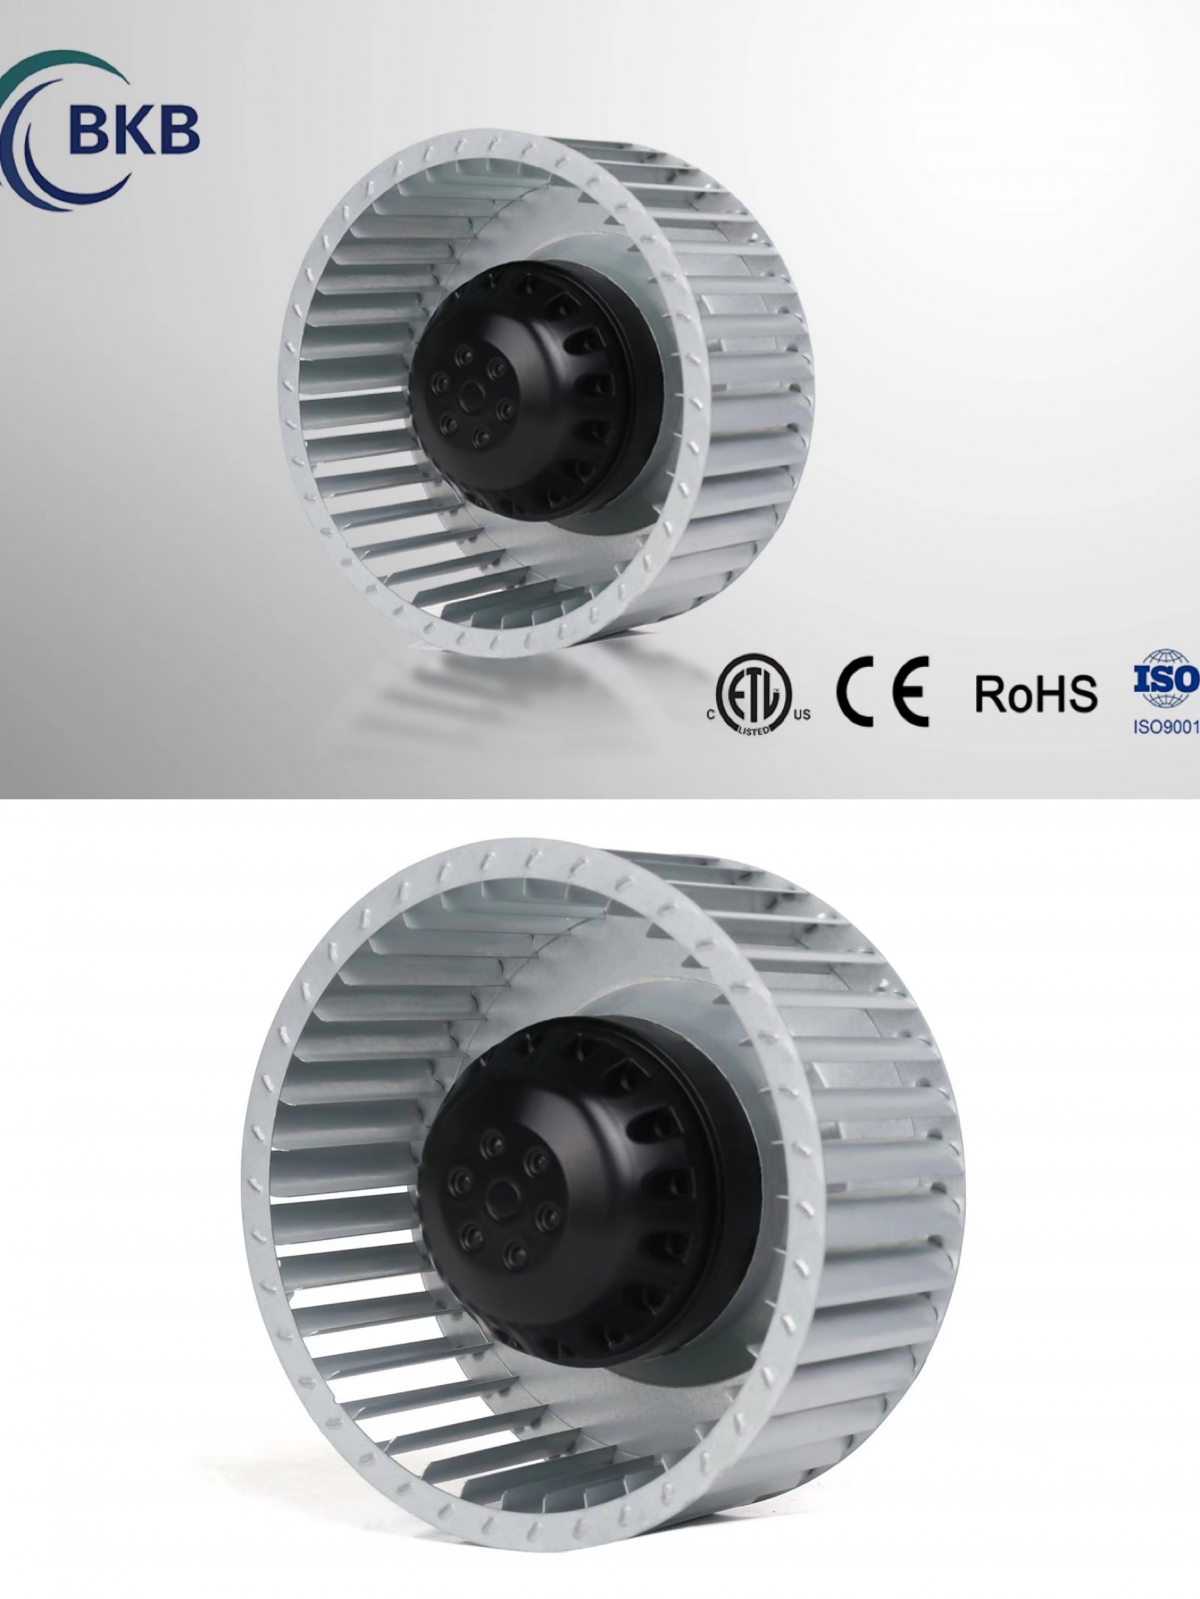 Forward curved centrifugal fans Φ146 ETL Approved-SUNLIGHT BLOWER,Centrifugal Fans, Inline Fans,Motors,Backward curved centrifugal fans ,Forward curved centrifugal fans ,inlet fans, EC fans